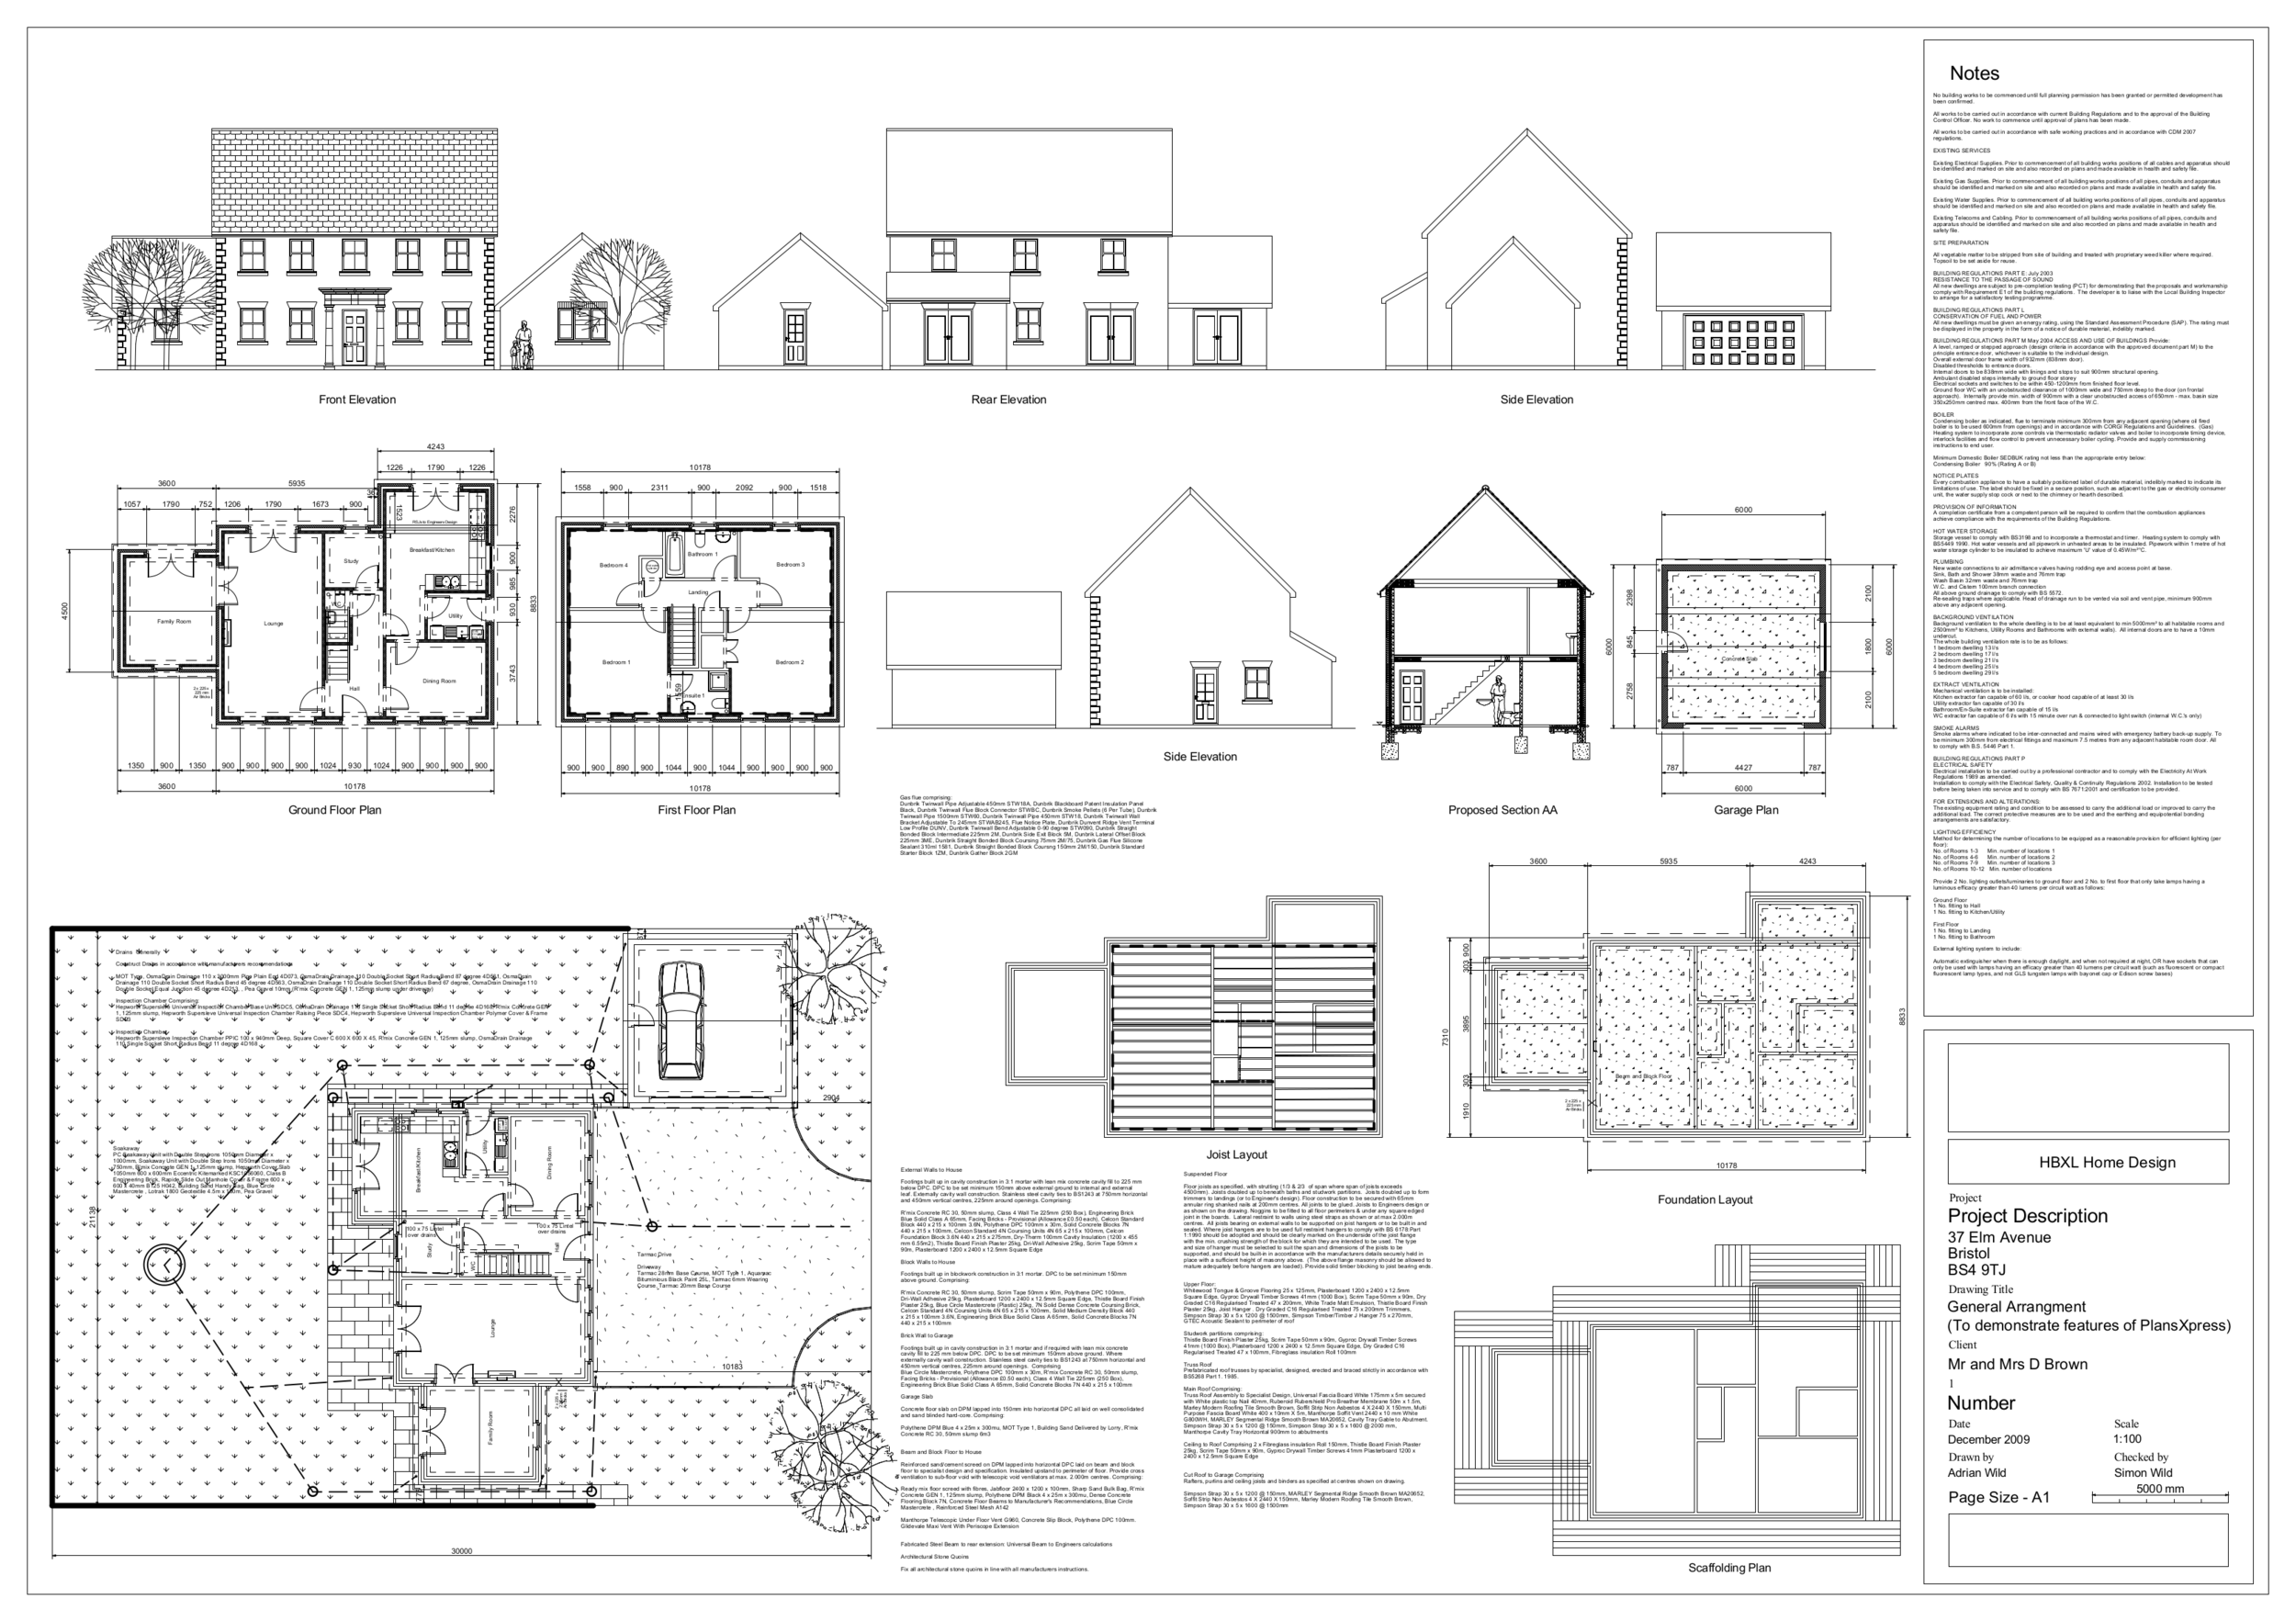 Professional Building Regulation Drawings | Online Drawing UK